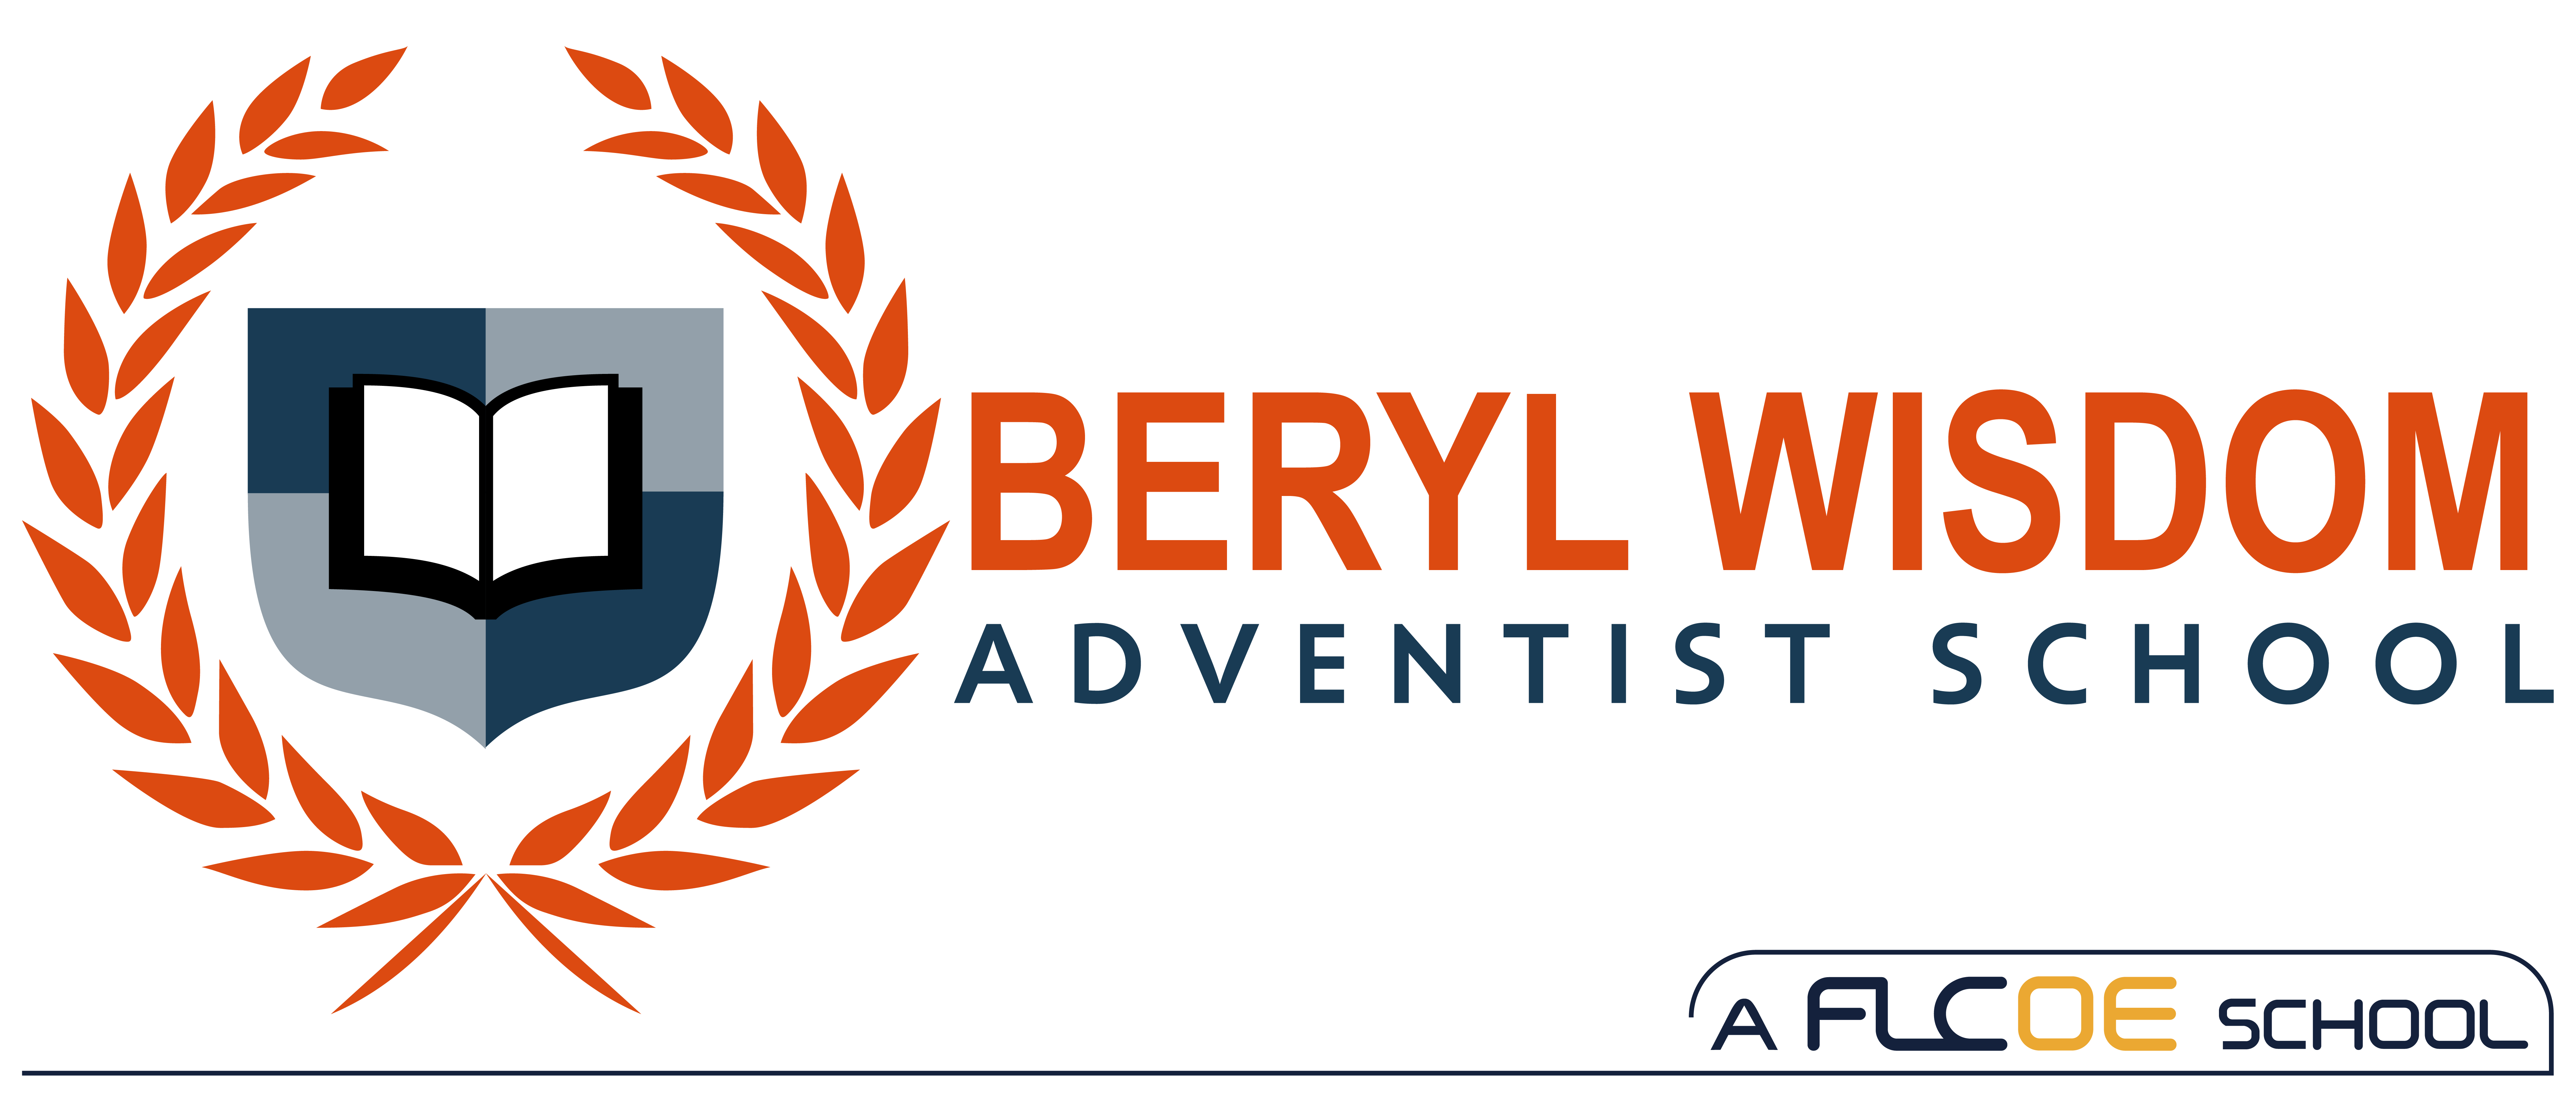 Beryl Wisdom Adventist School